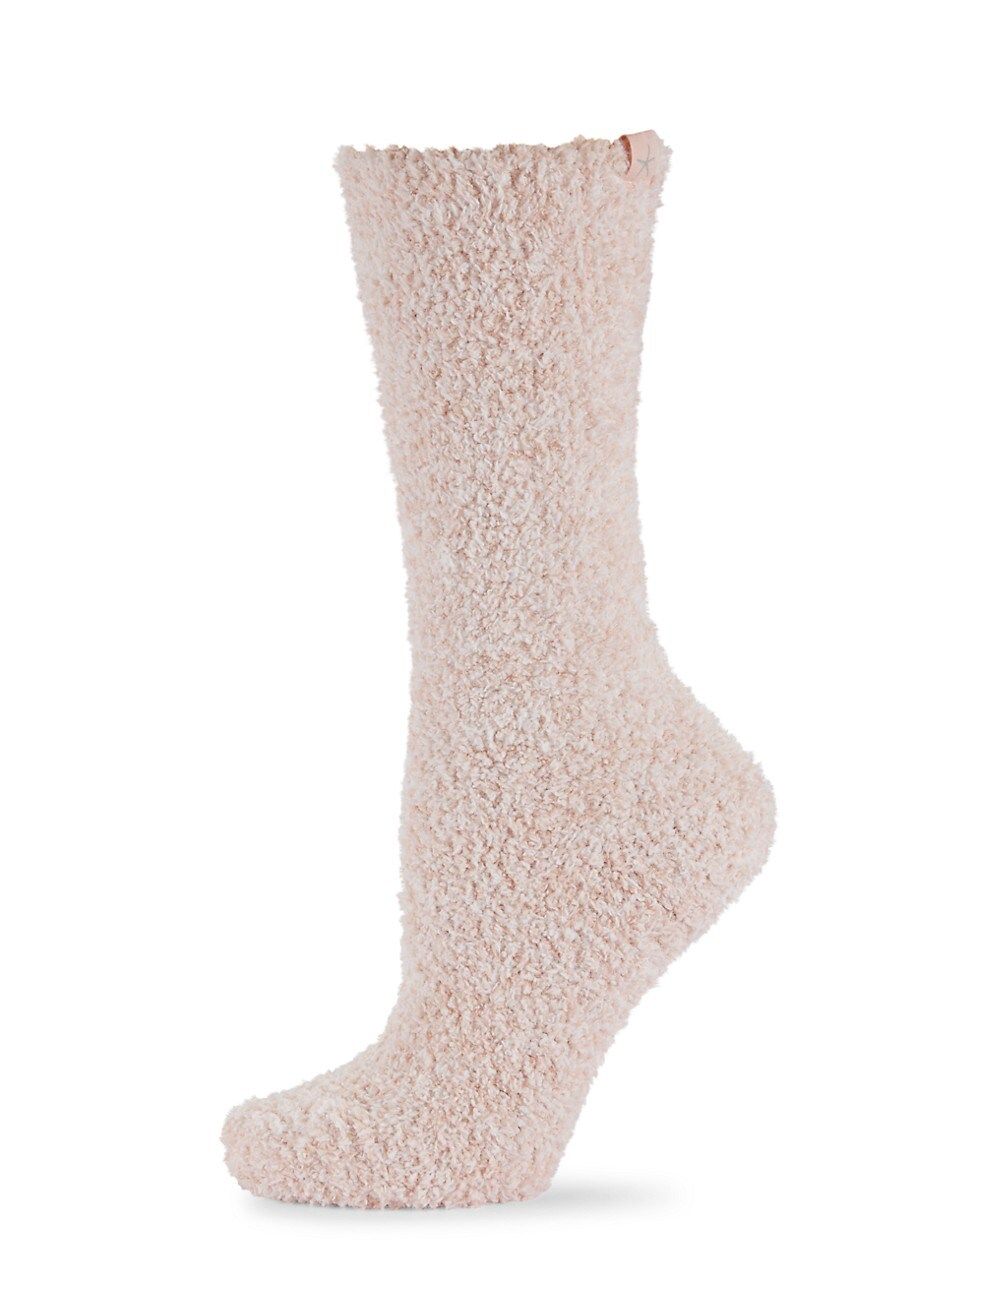 Cozychic® Heathered Socks | Saks Fifth Avenue